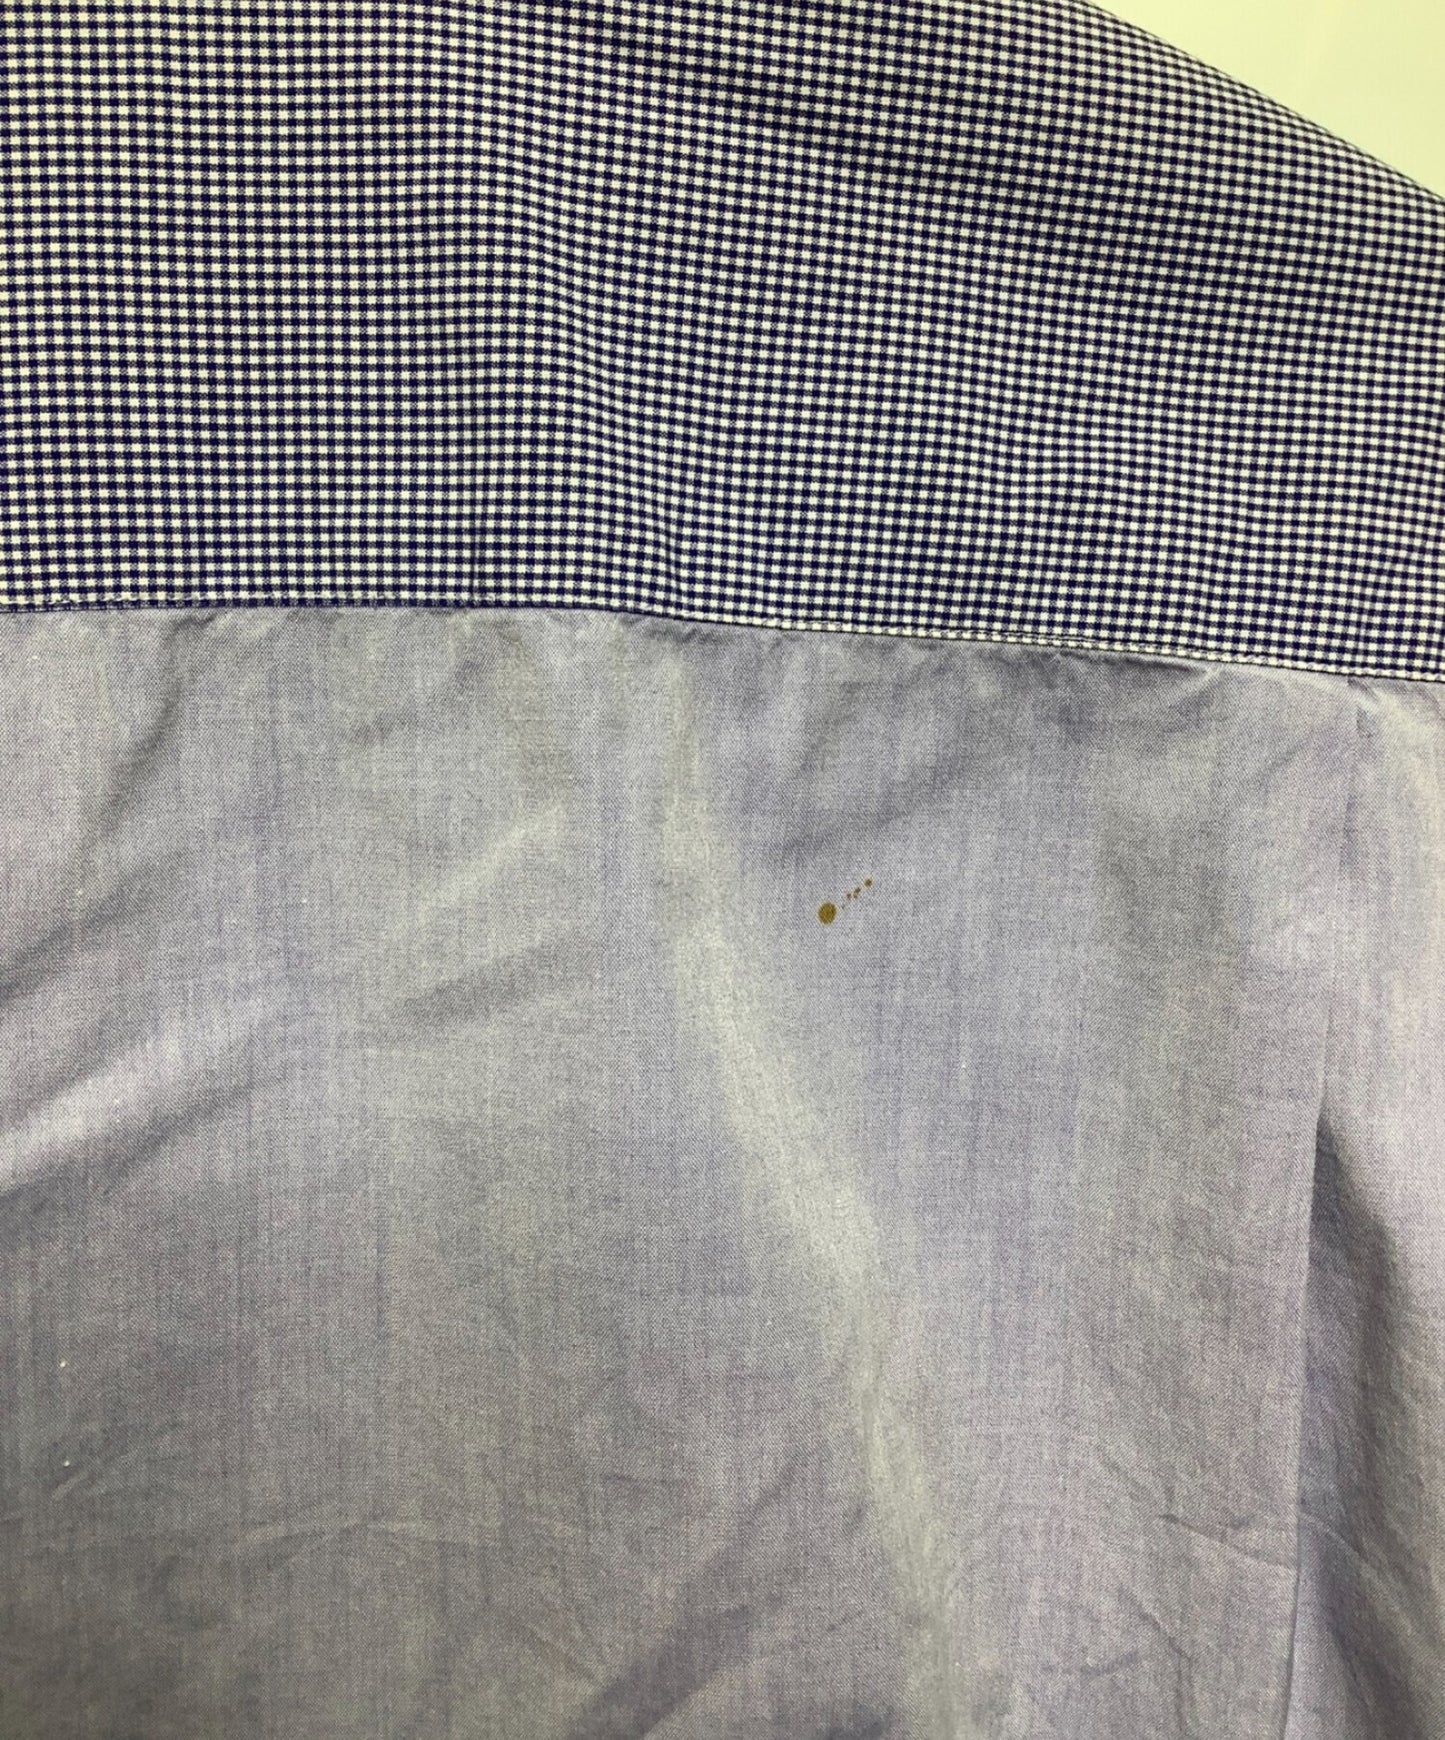 [Pre-owned] COMME des GARCONS HOMME Cotton Broad Shirt HC-B118